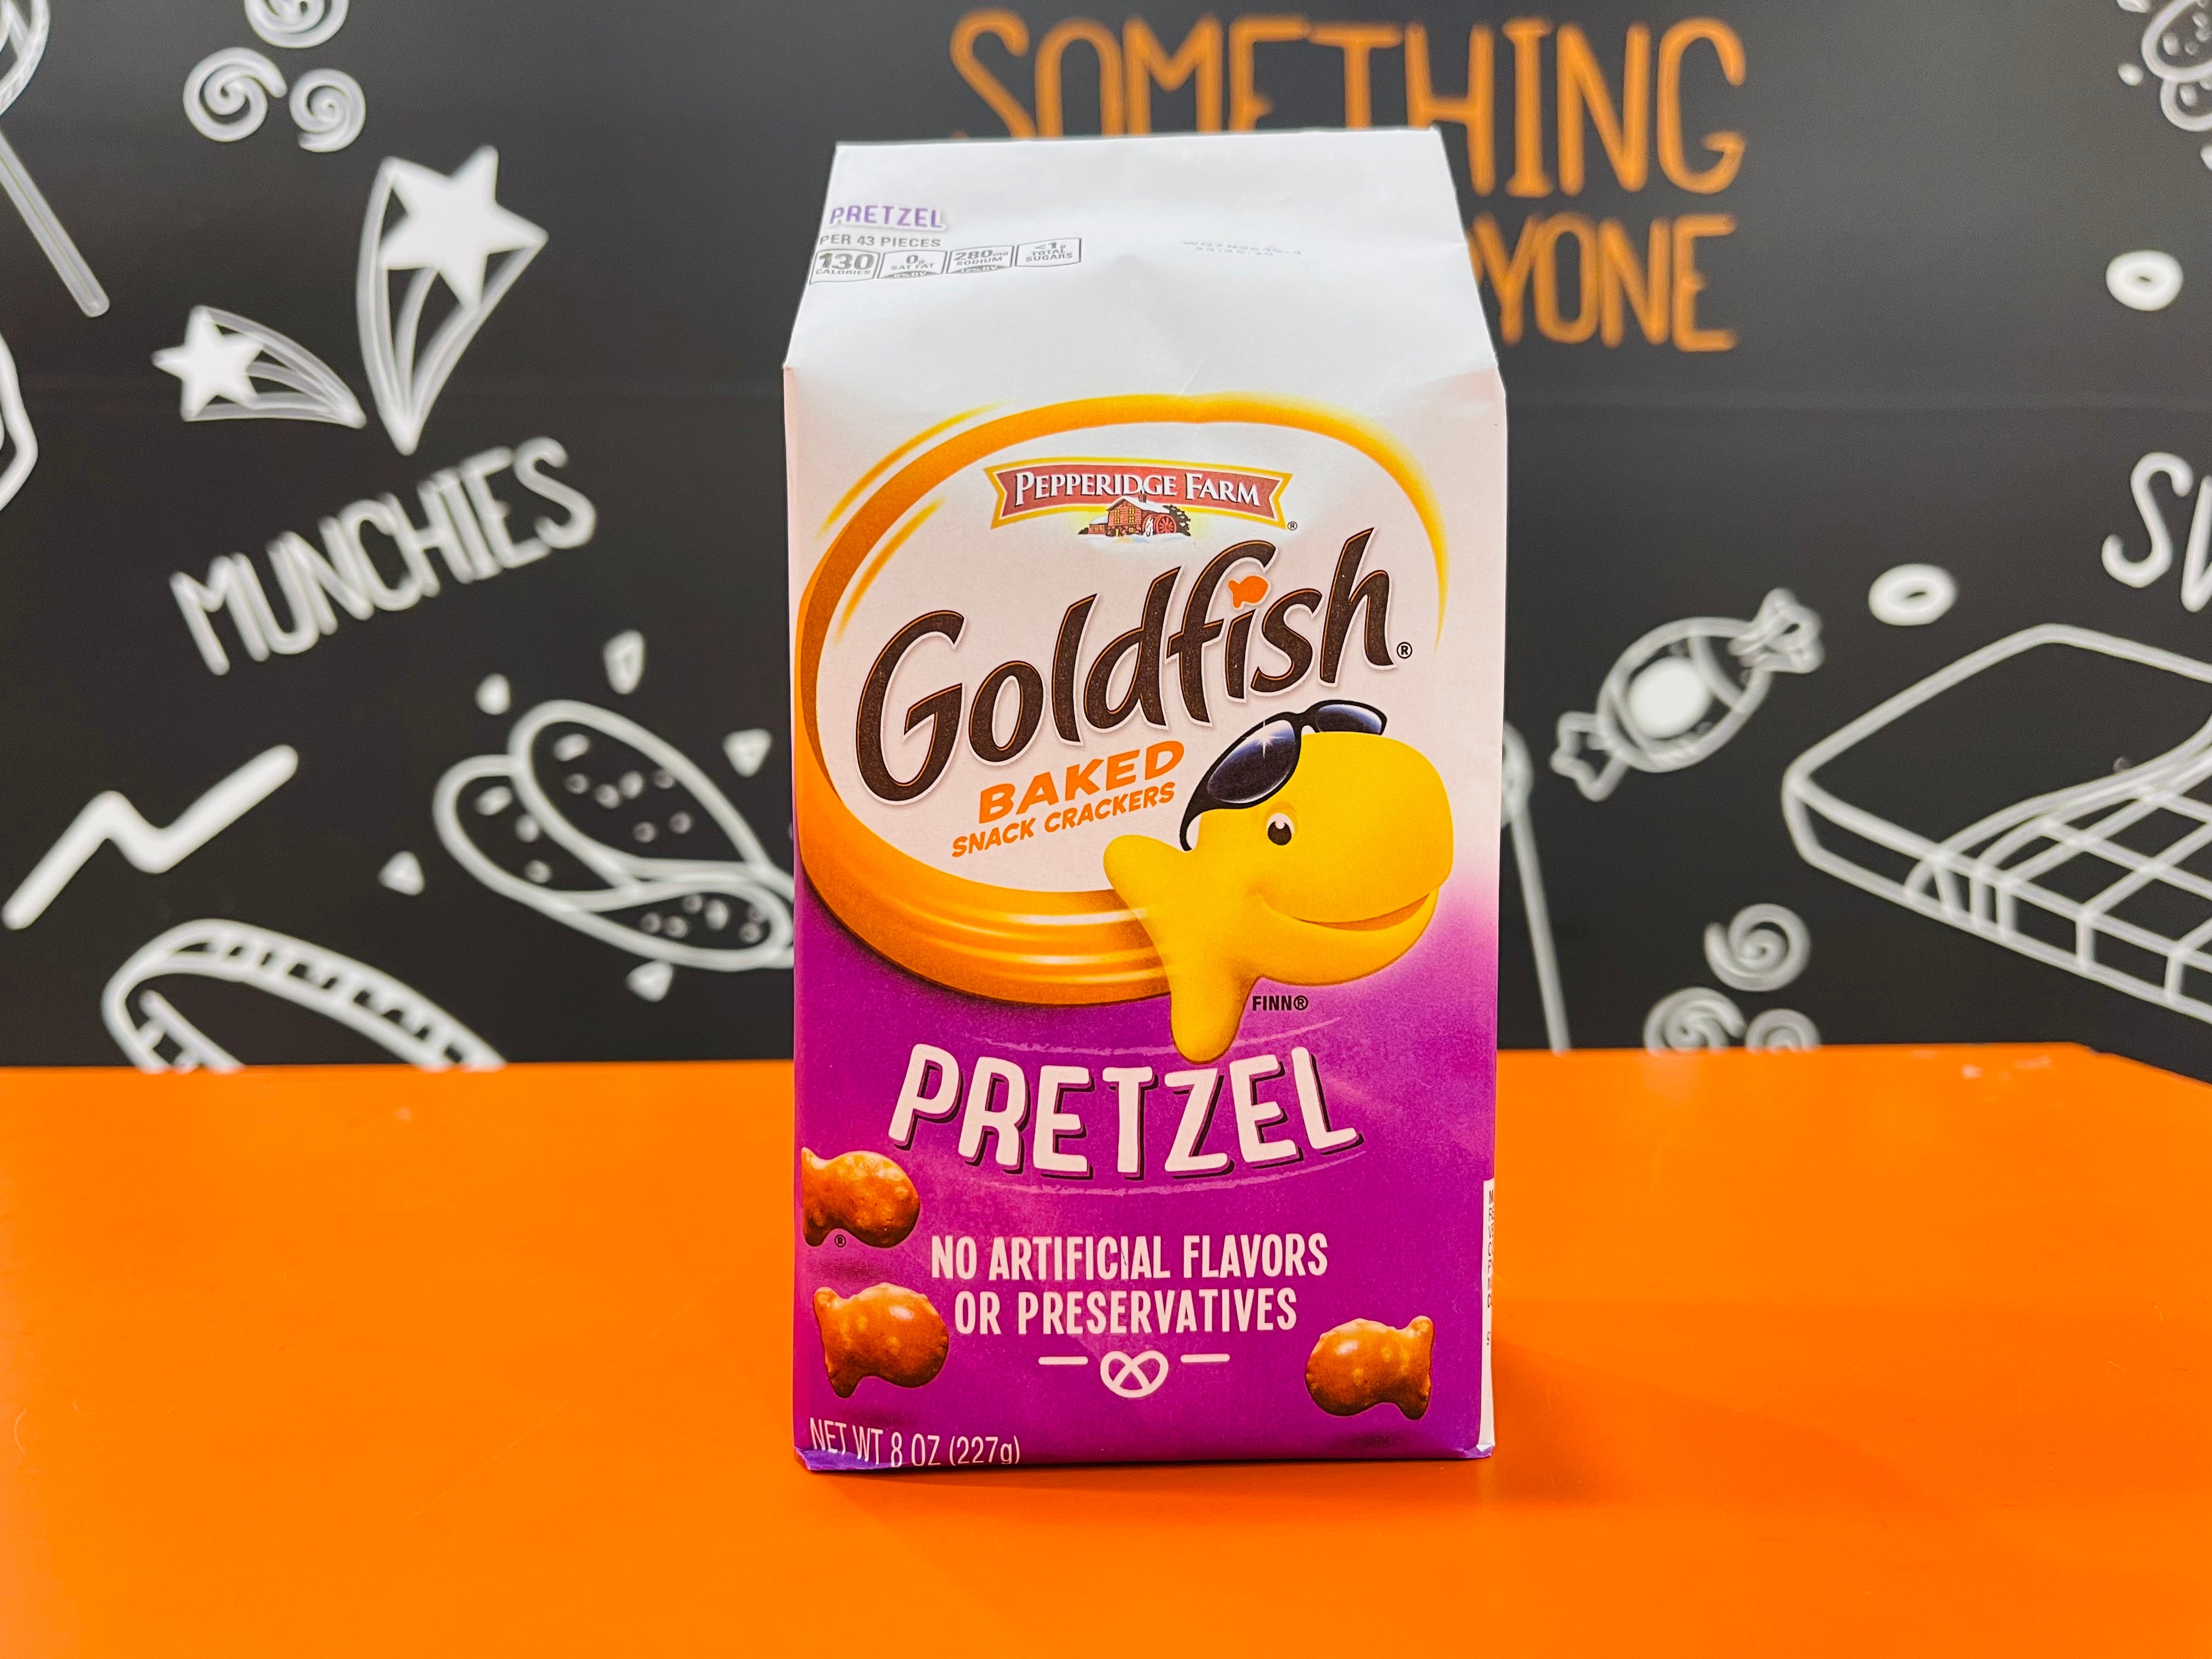 Goldfish Pretzel